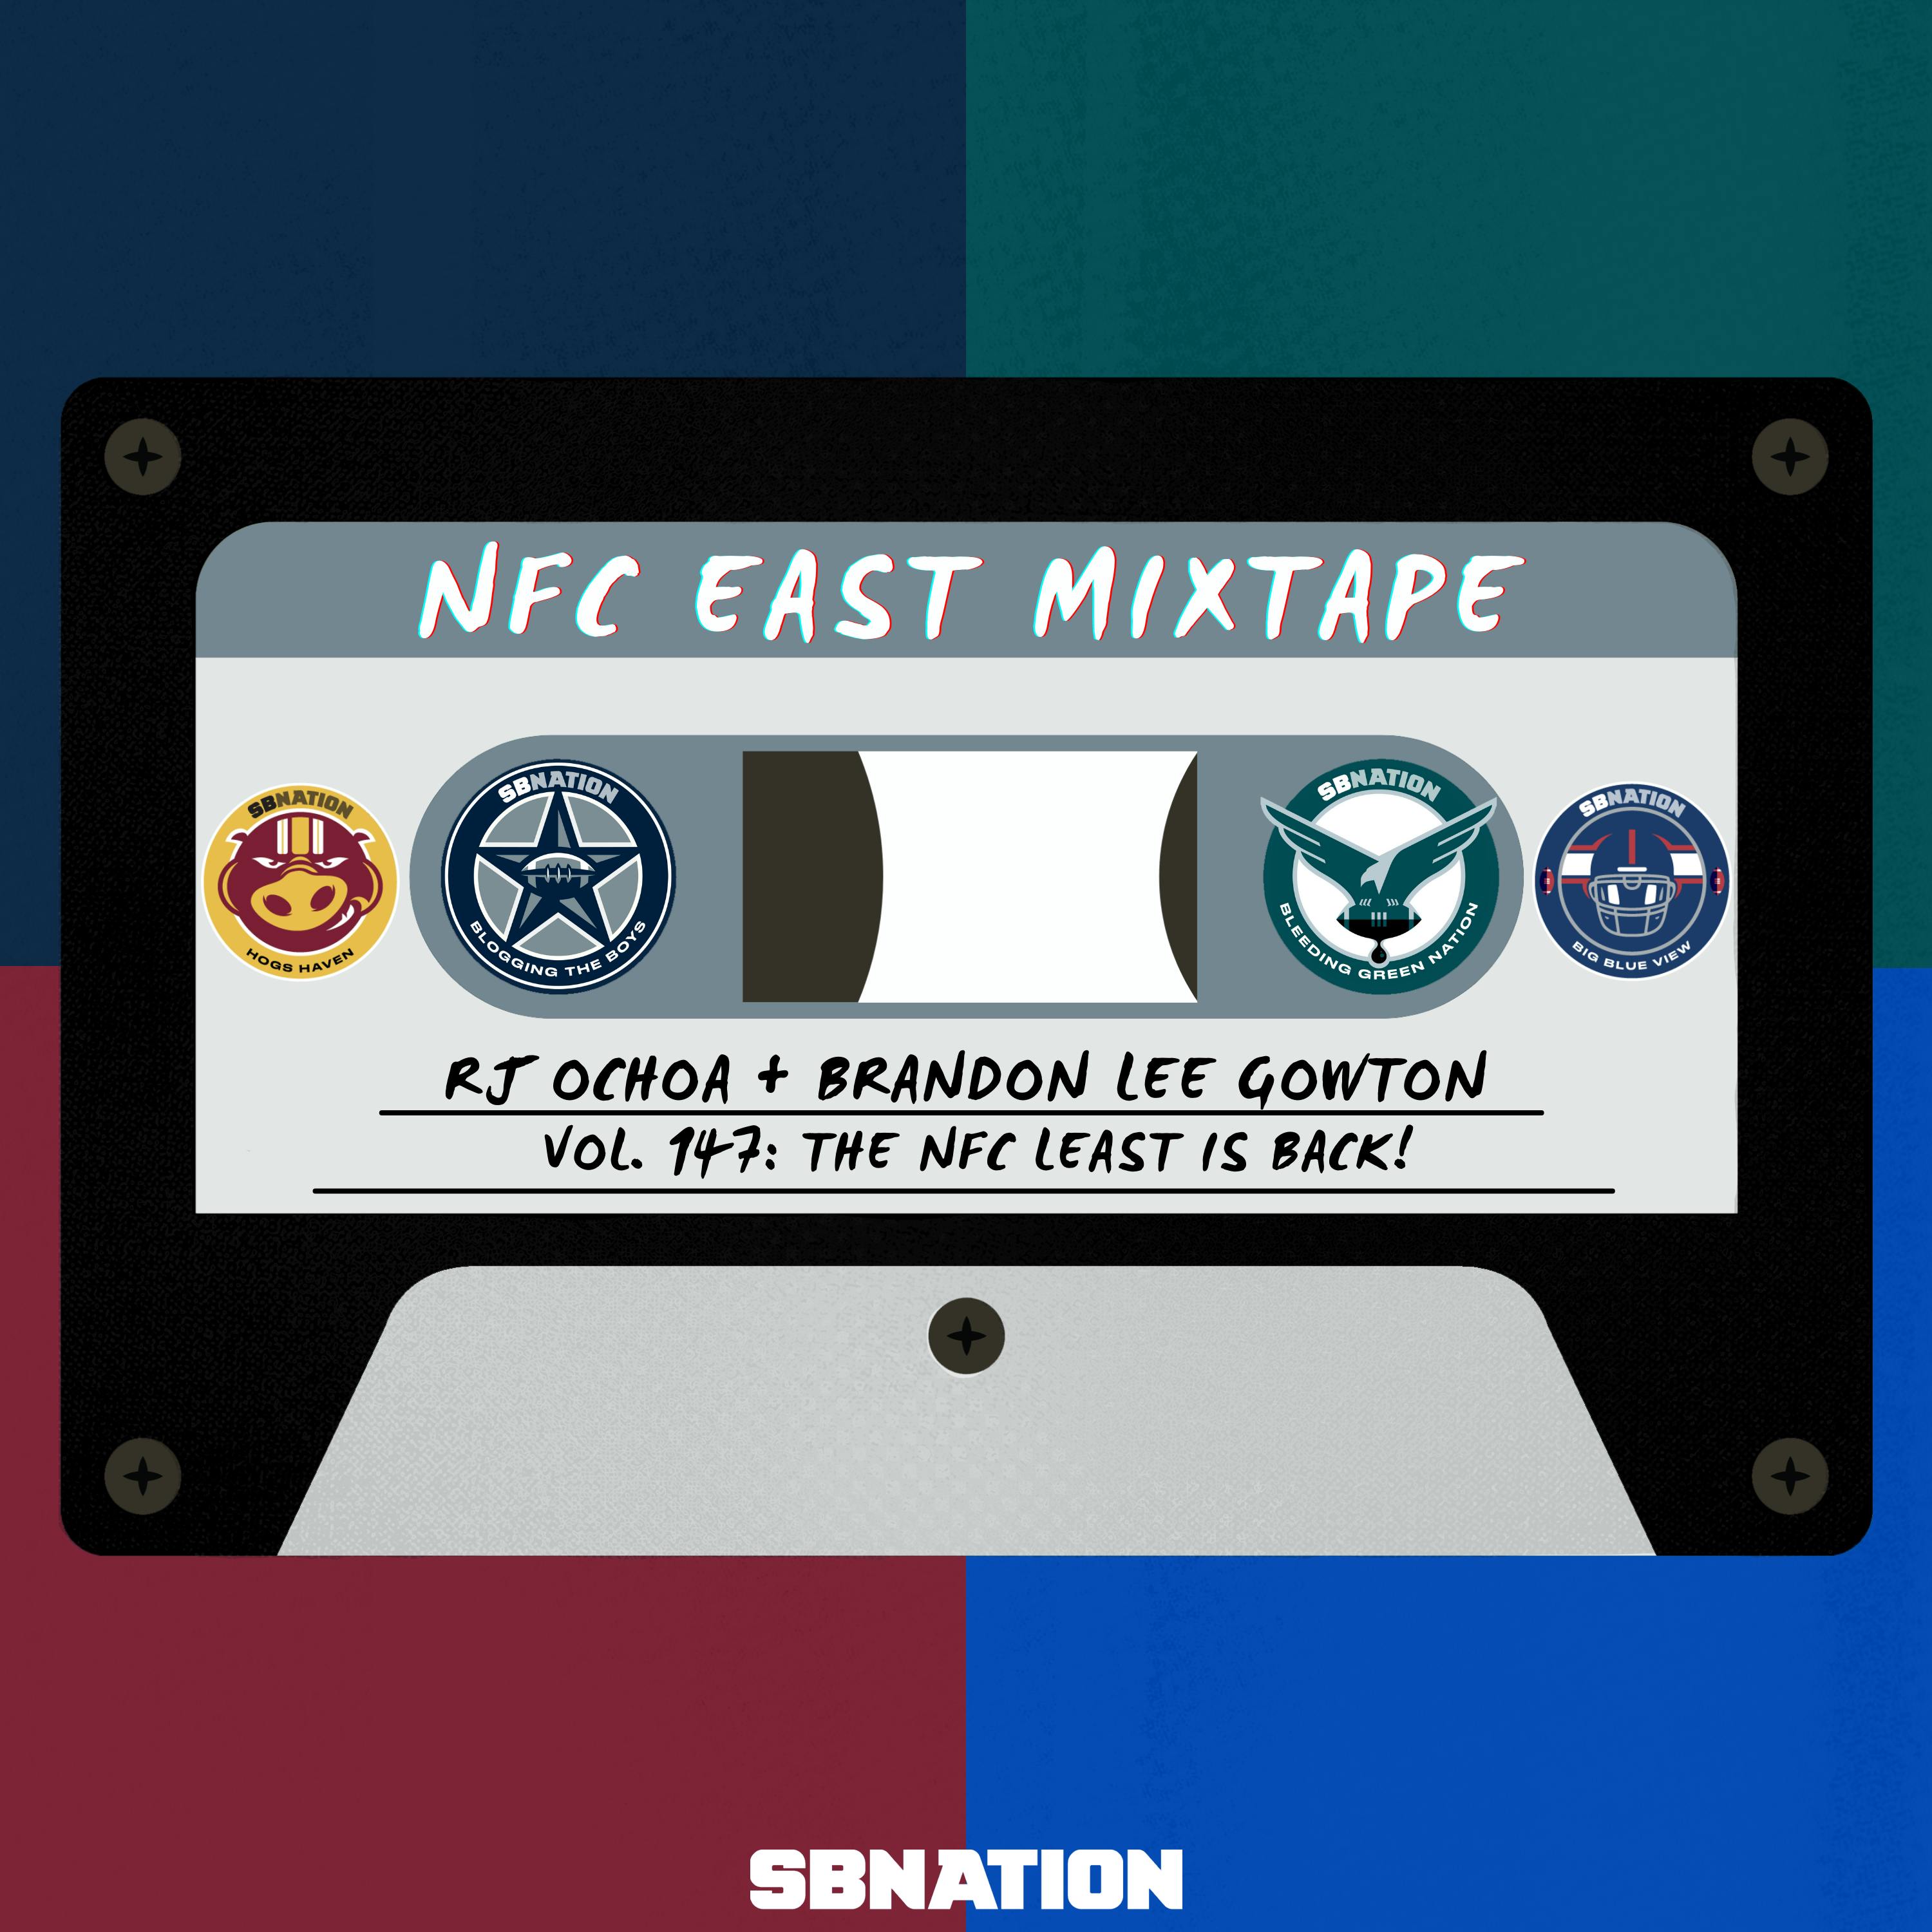 NFC East Mixtape Vol.147:  The NFC Least is back!